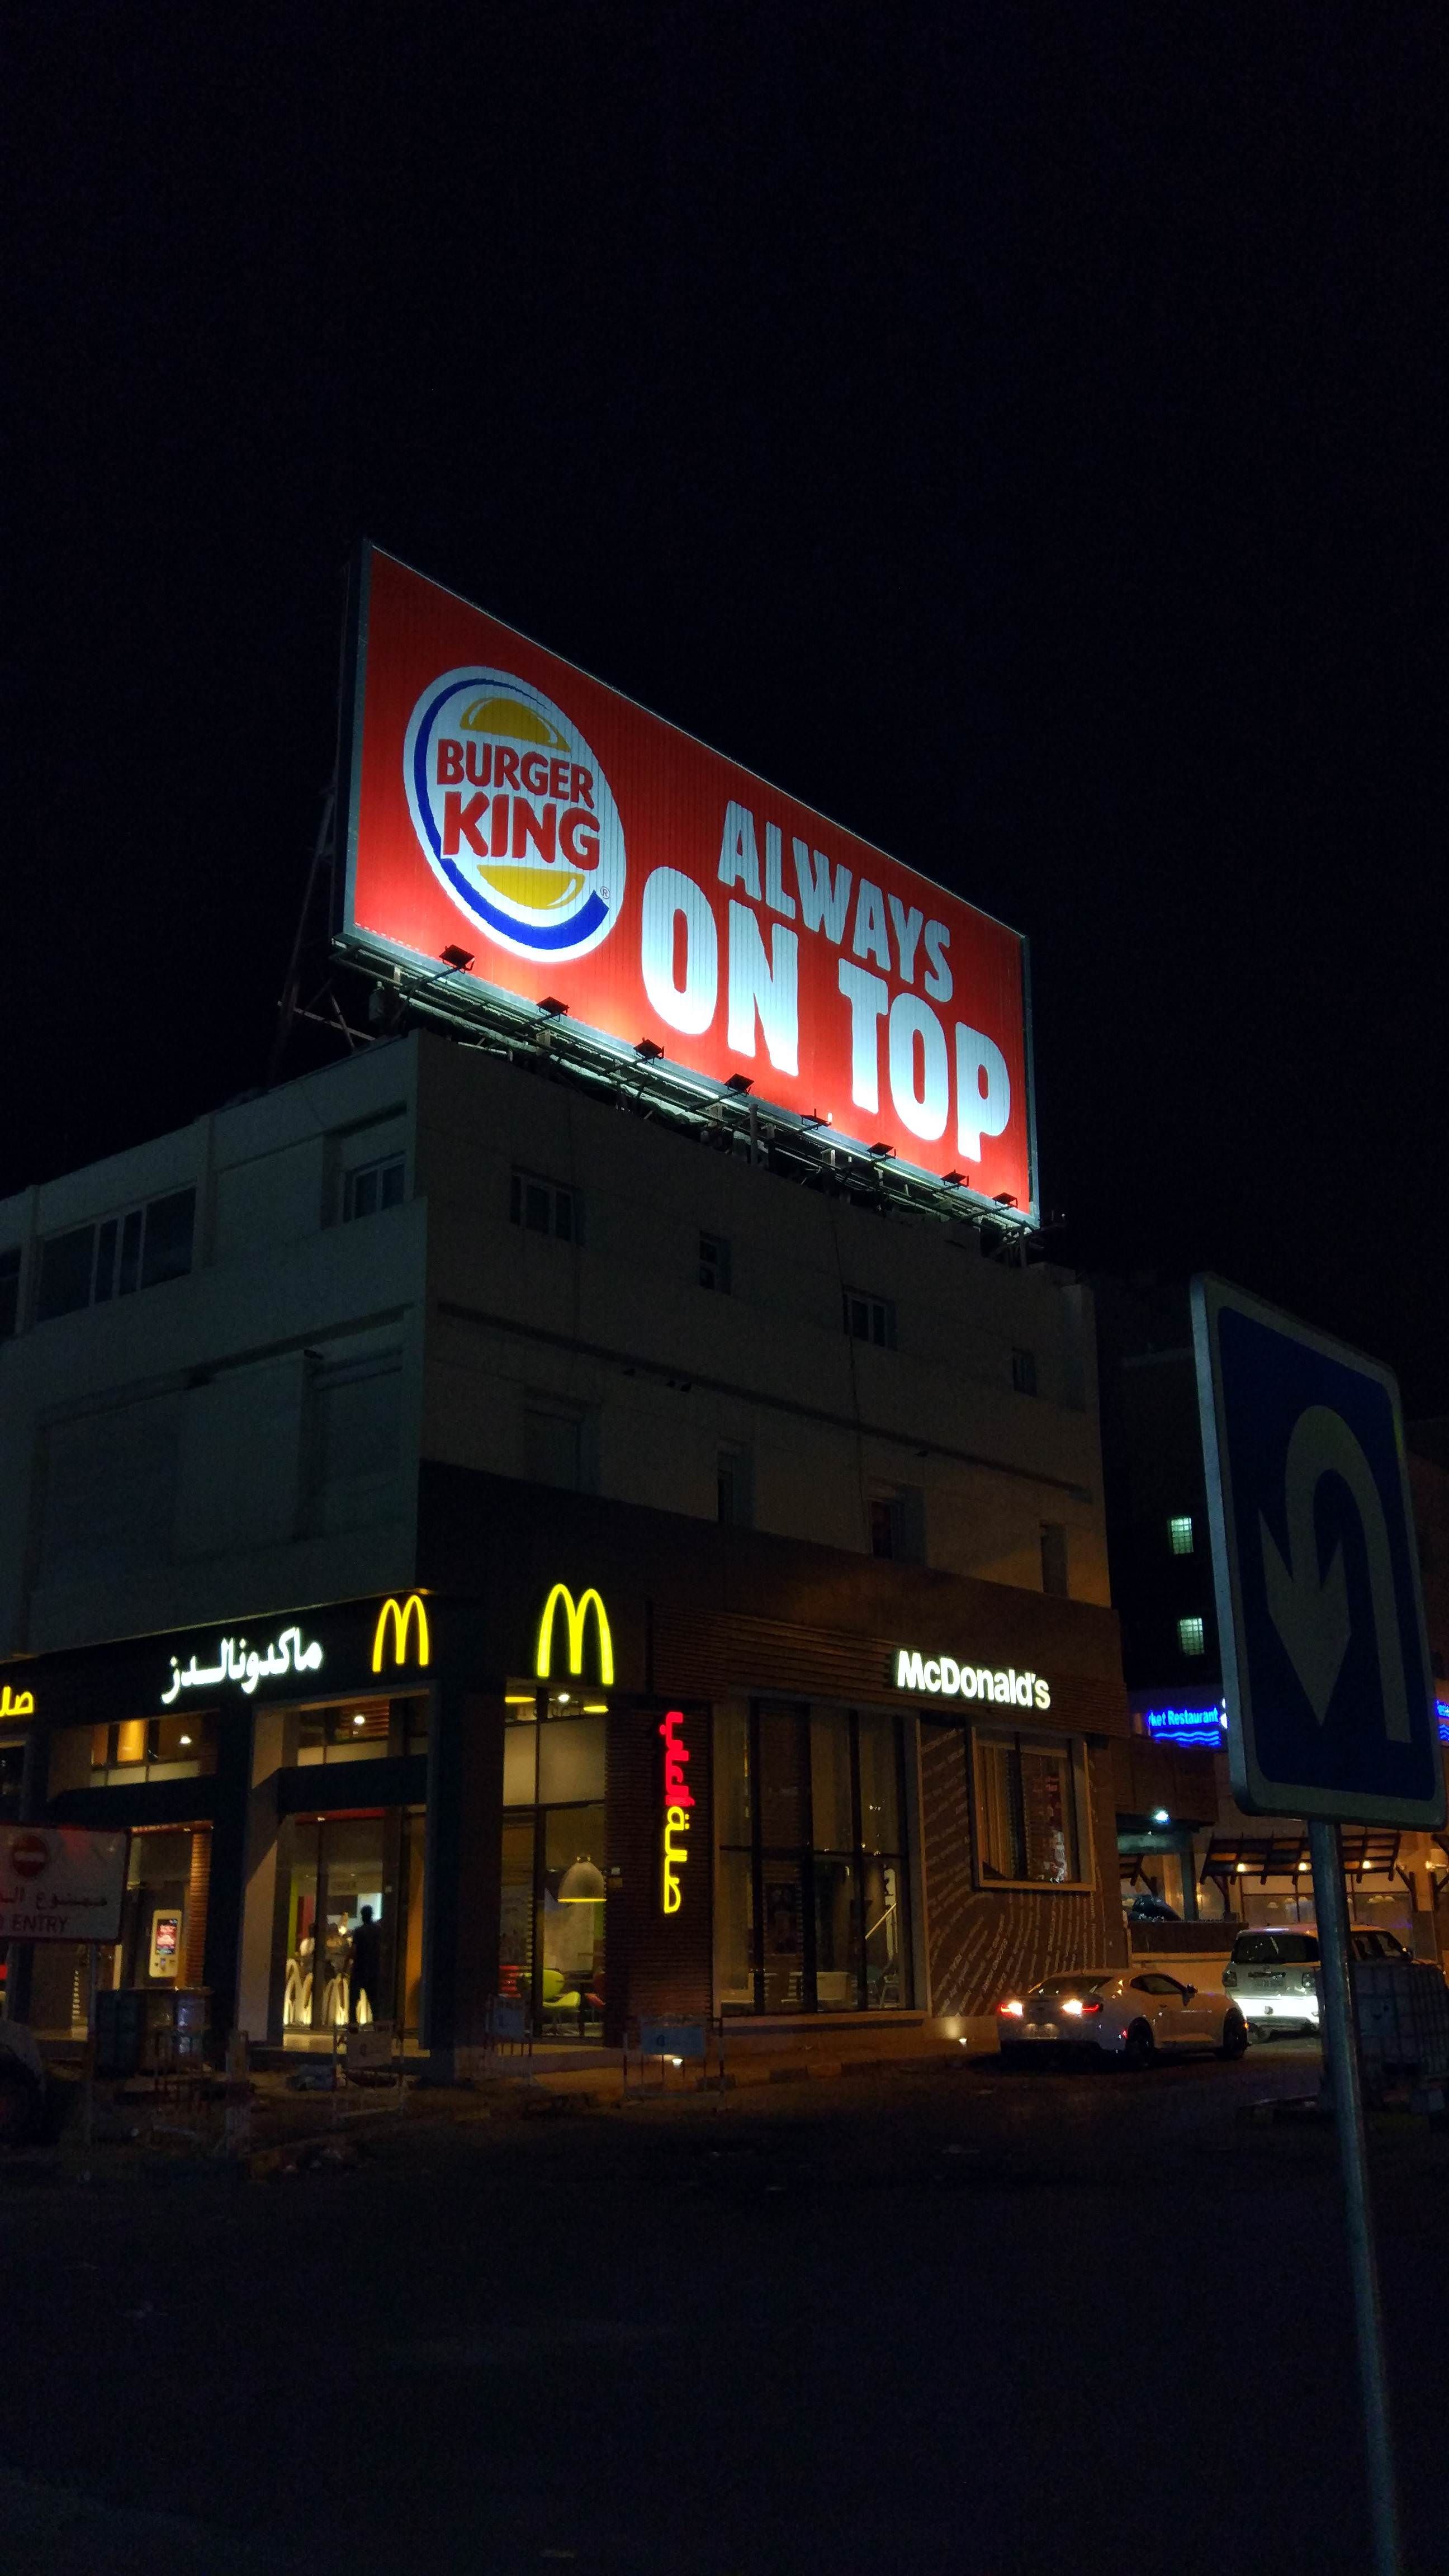 Just a Burger Kind ad on top of a McDonald's restaurant